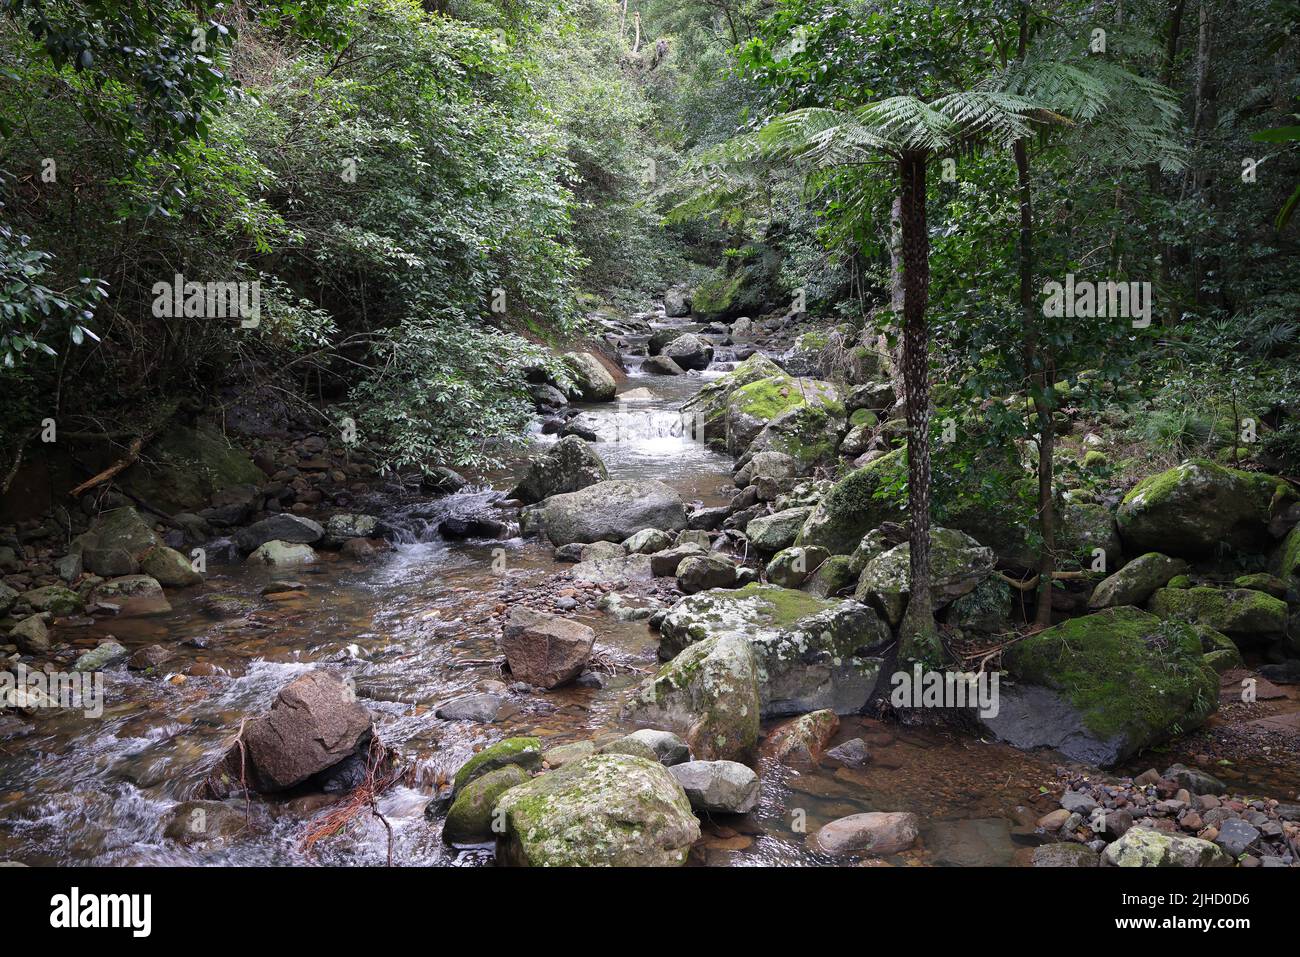 Stream flowing through South Eastern Australian Rainforest Stock Photo